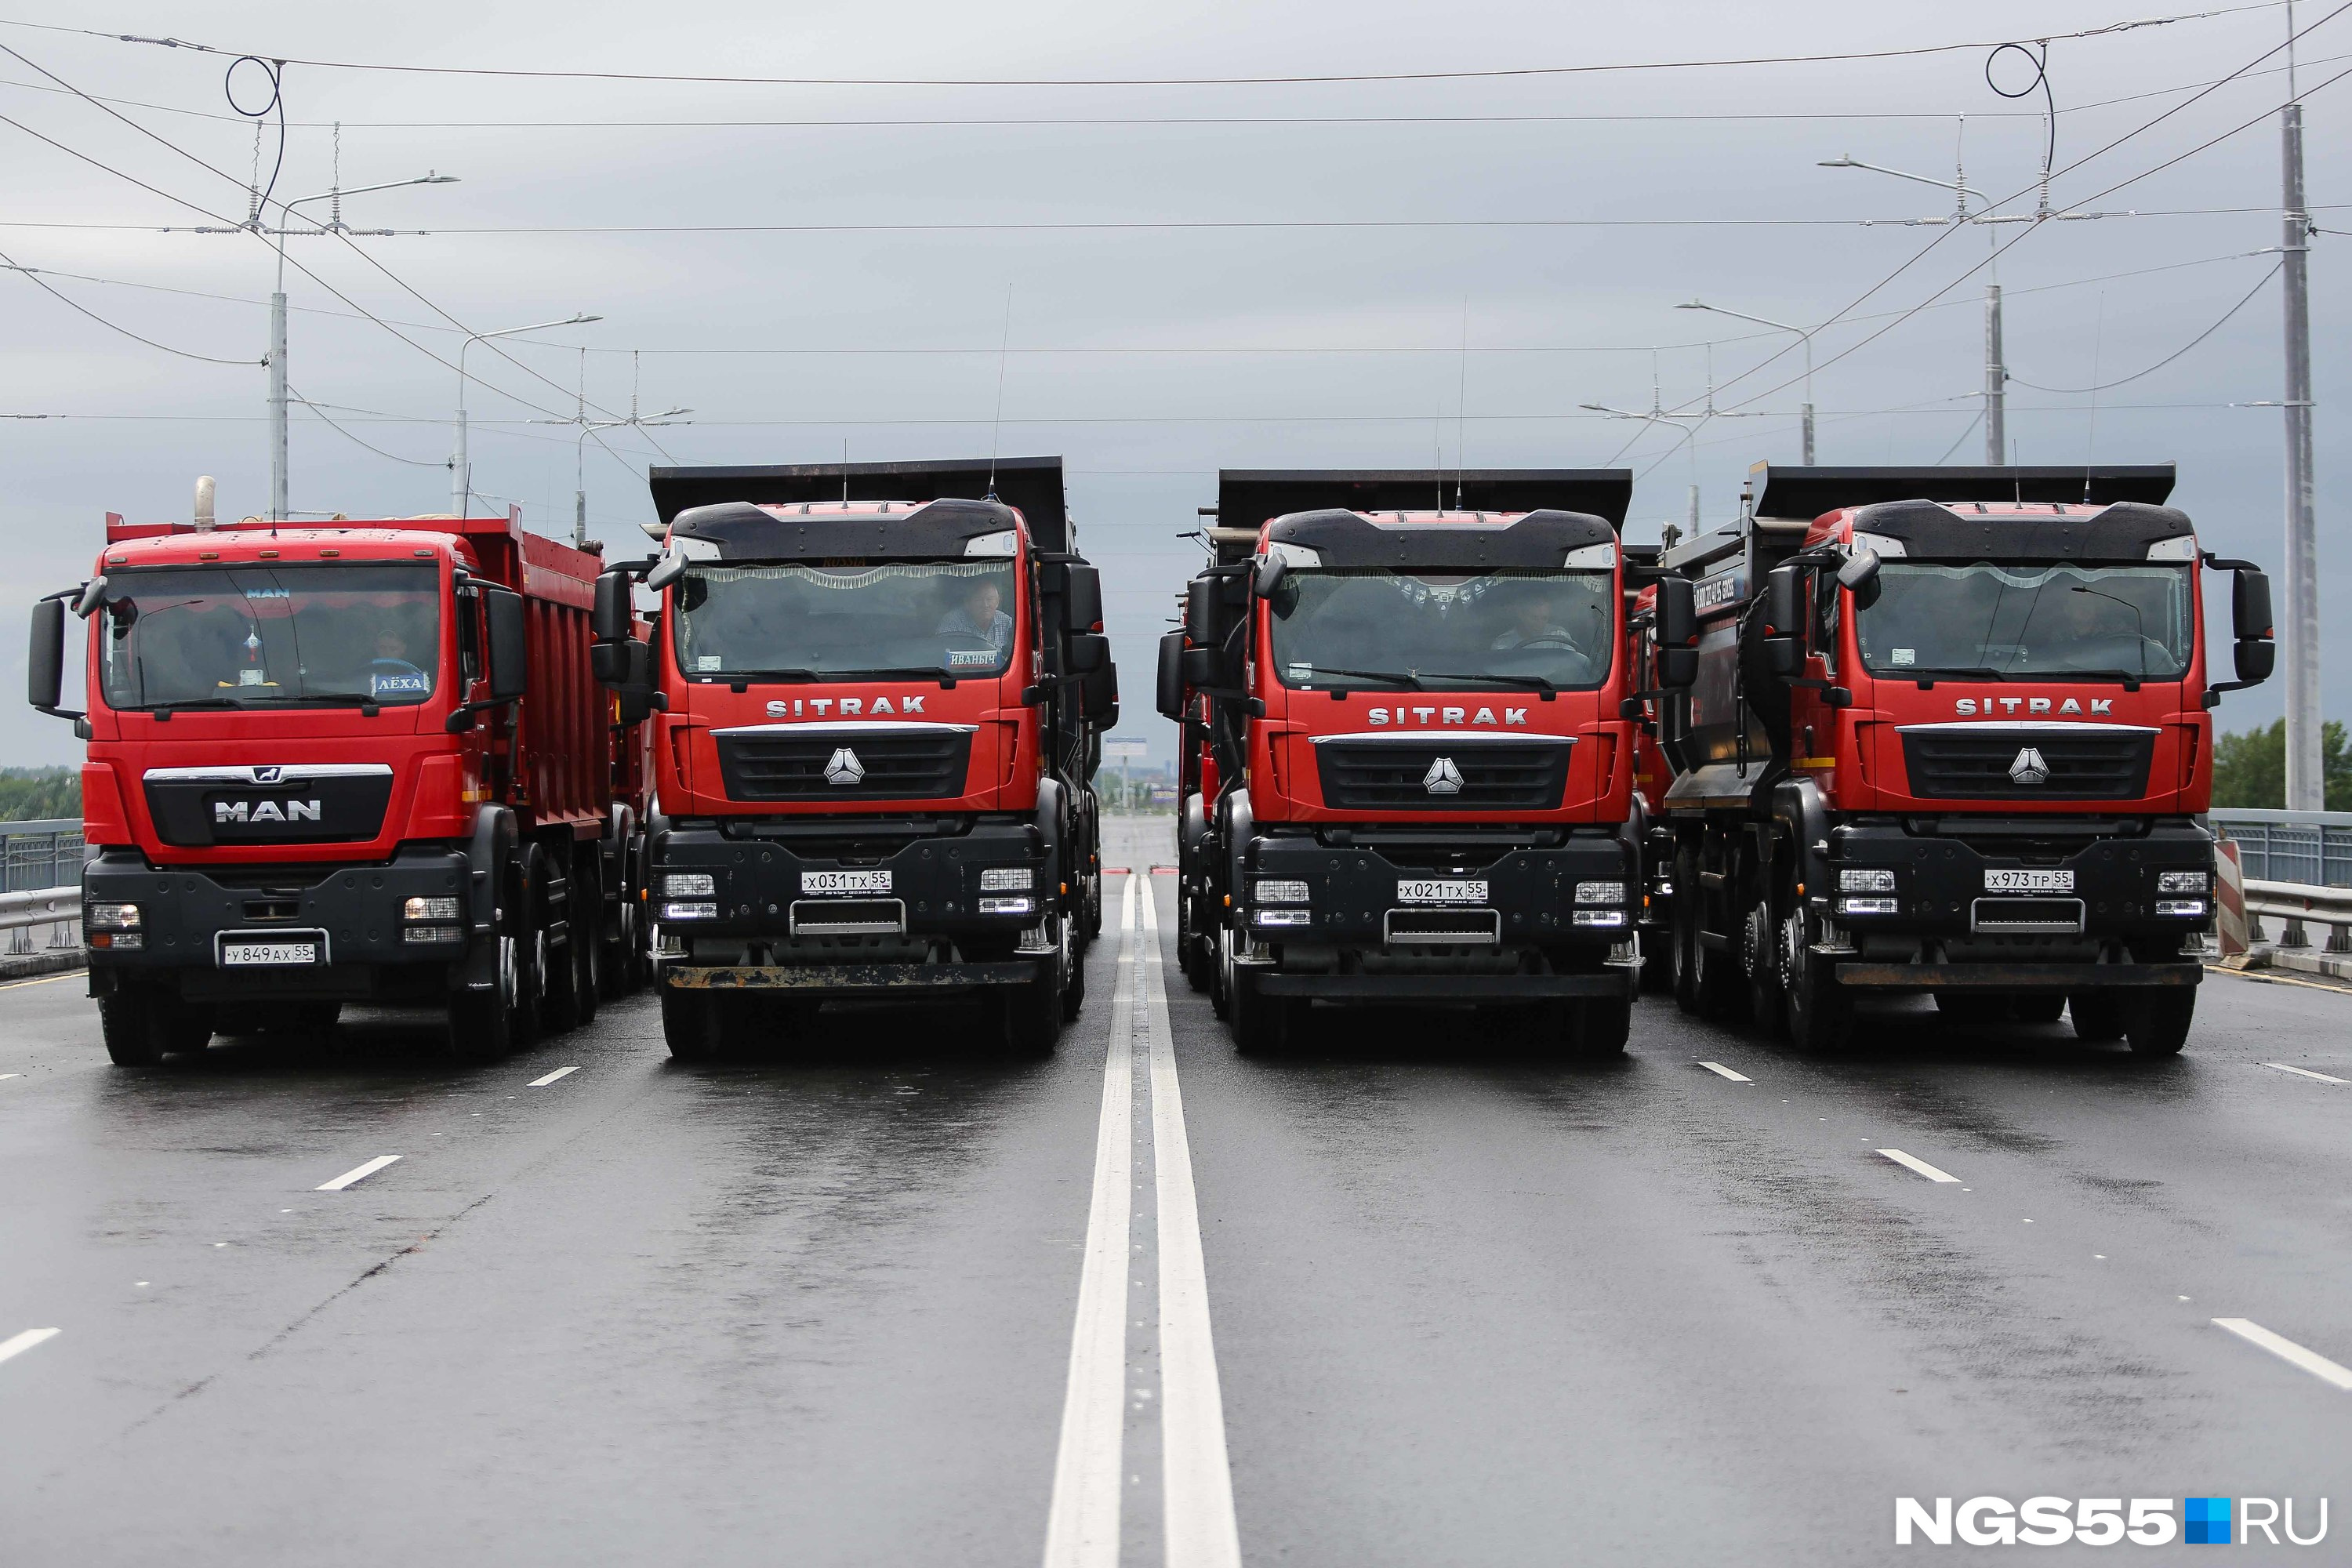 Как 24 грузовика тестировали Ленинградский мост: фоторепортаж